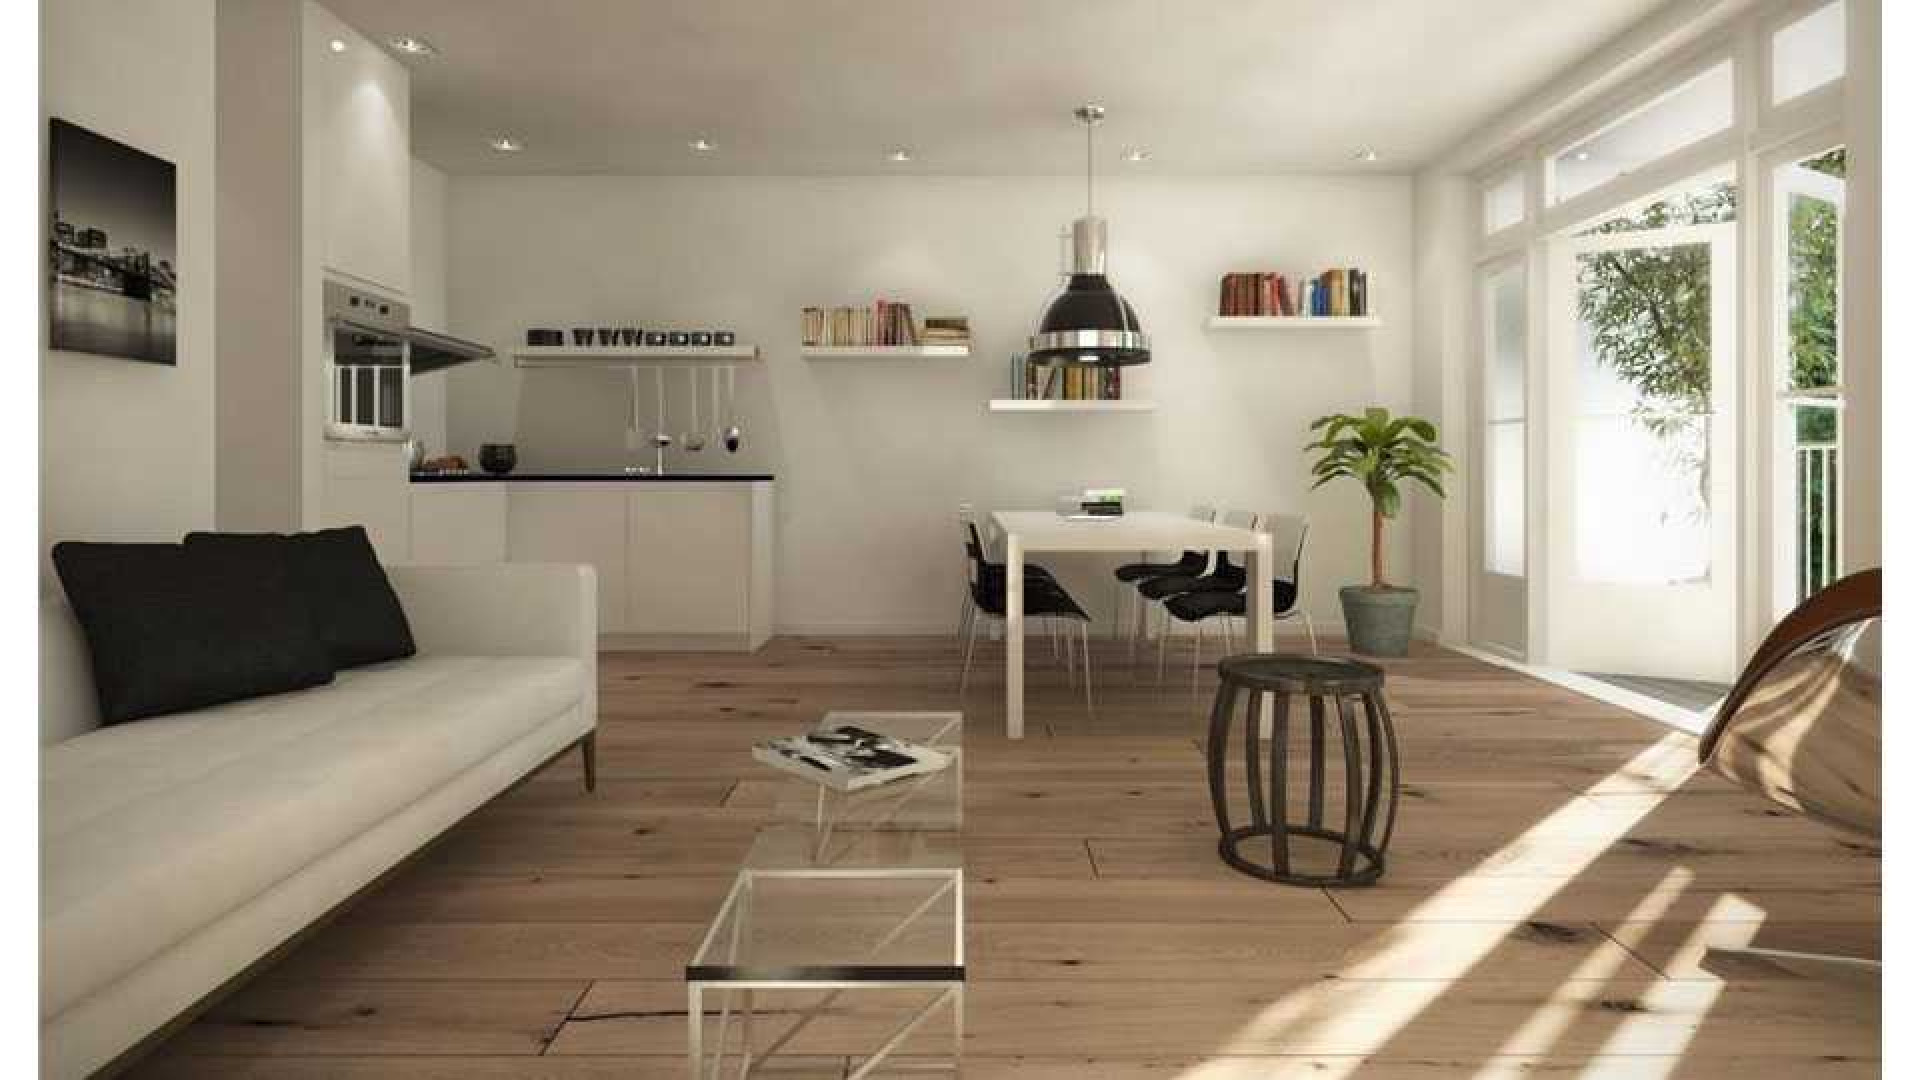 Khalid Boulahrouz koopt dubbel appartement in Amsterdam. Zie foto's 1